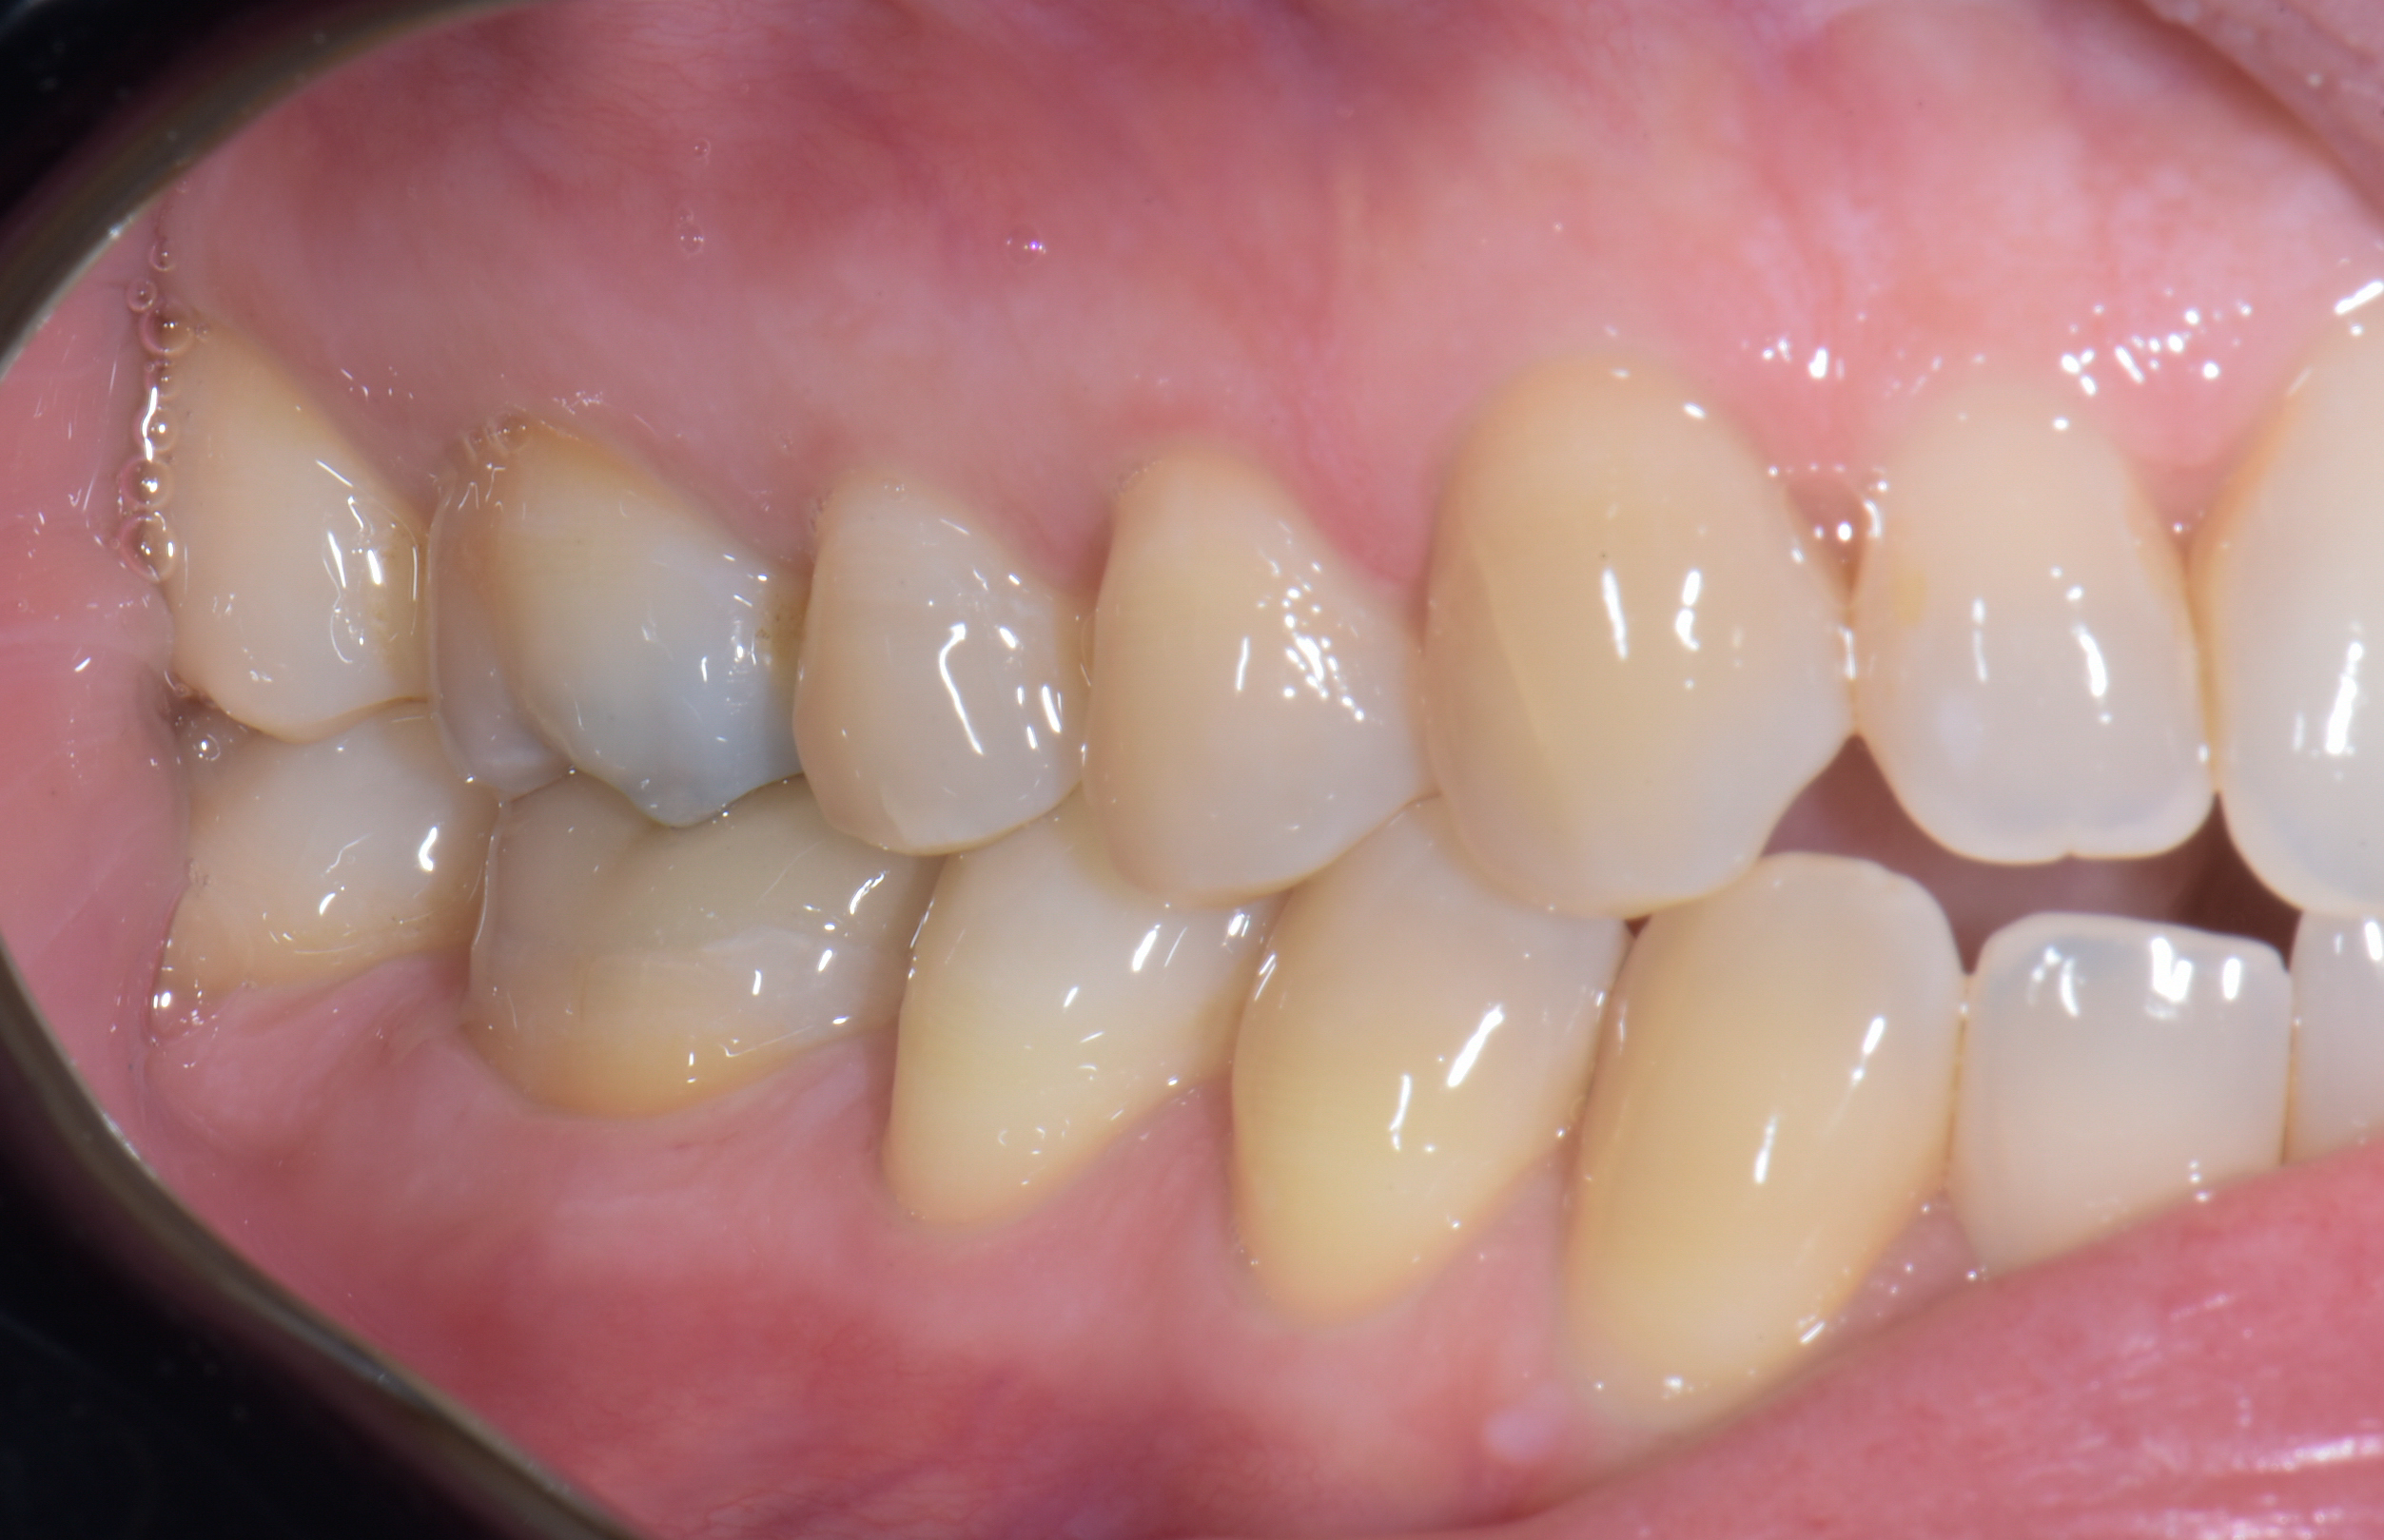 Incrustación (overlay) de cerámica infiltrada con polímeros (vita enamic)  en molar inferior derecho